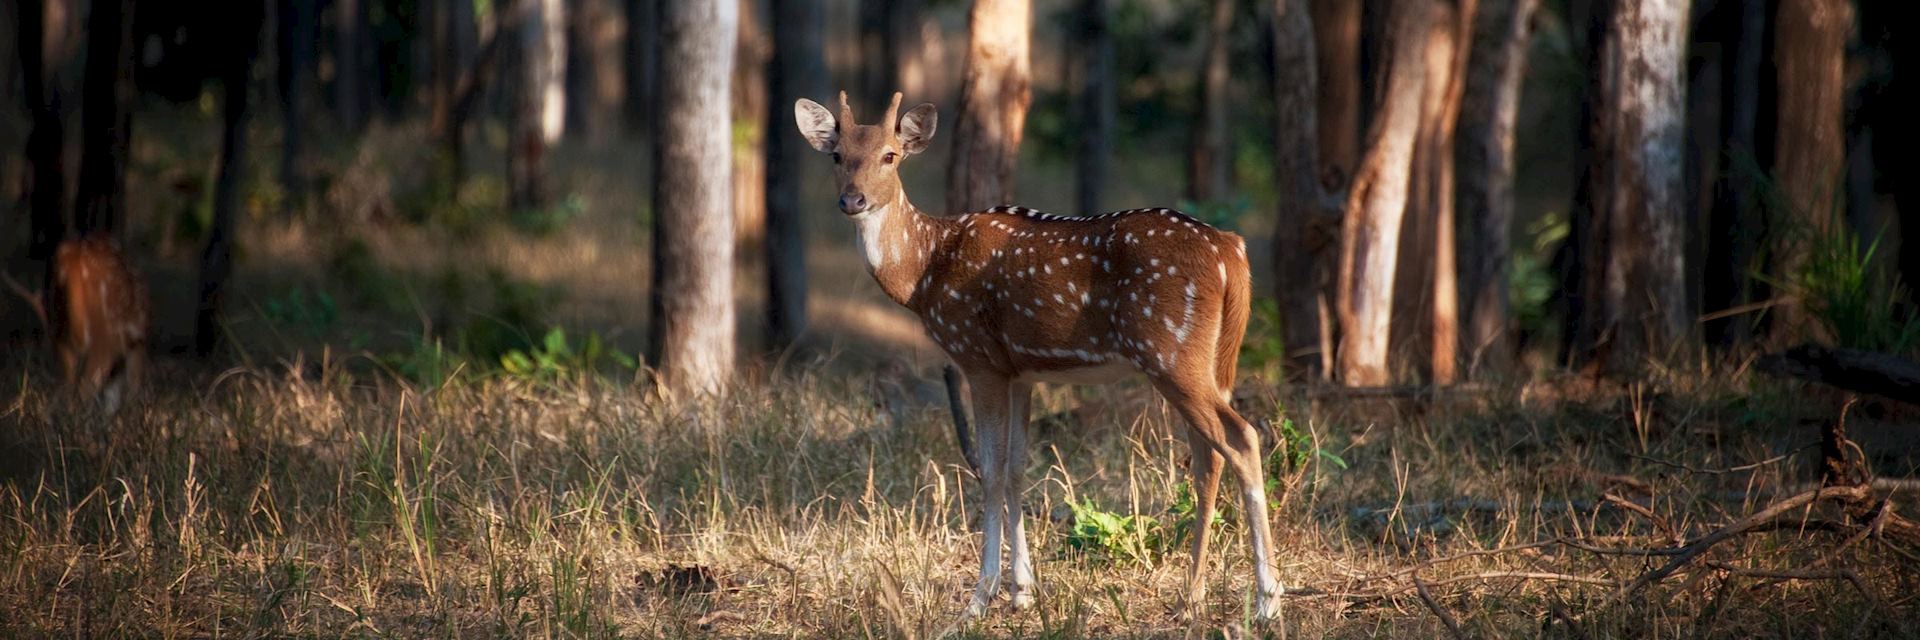 Deer in Panna National Park